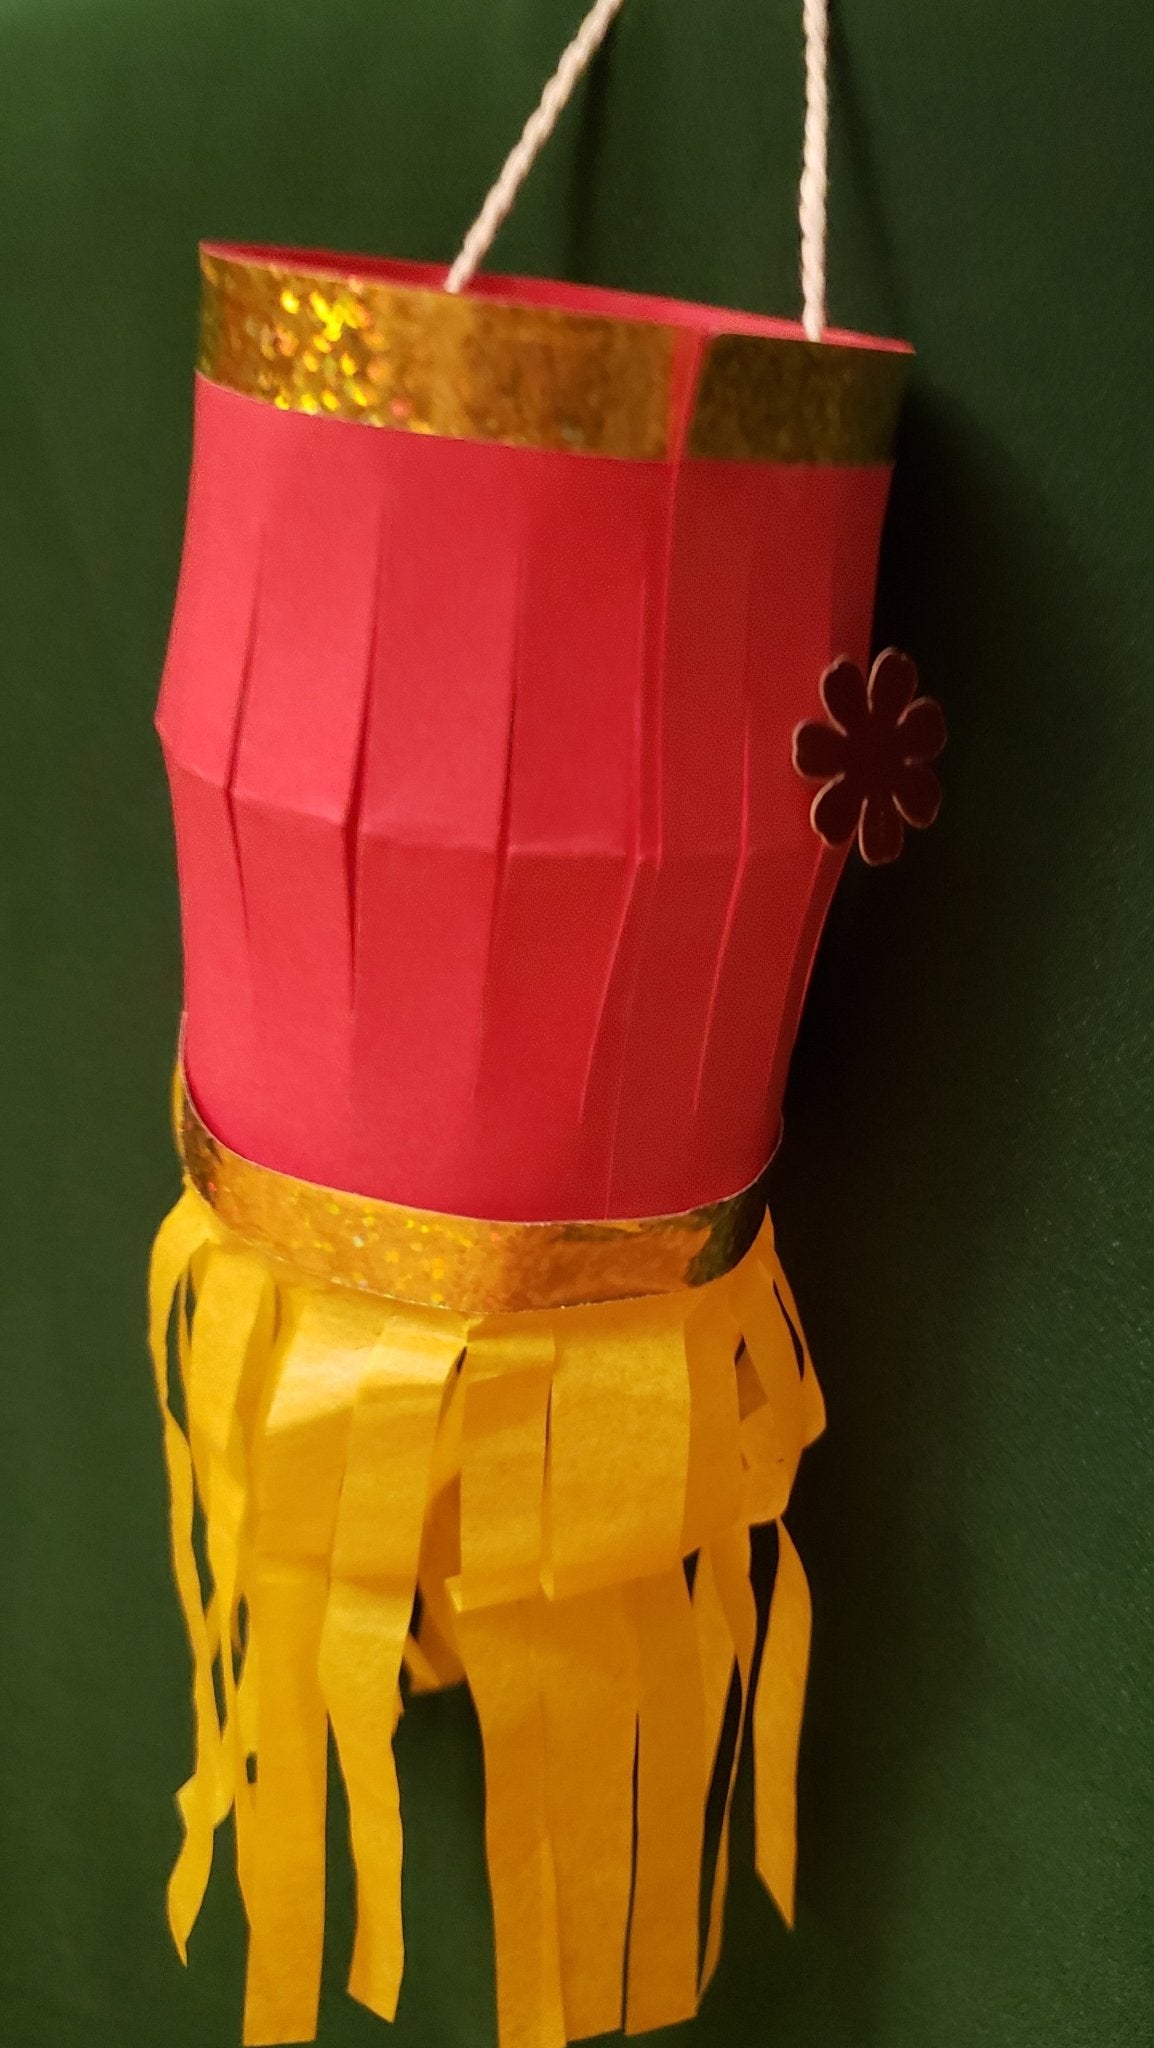 Paper Lantern Diwali Classroom Kit - 10 Crafts per Kit - Tulsie